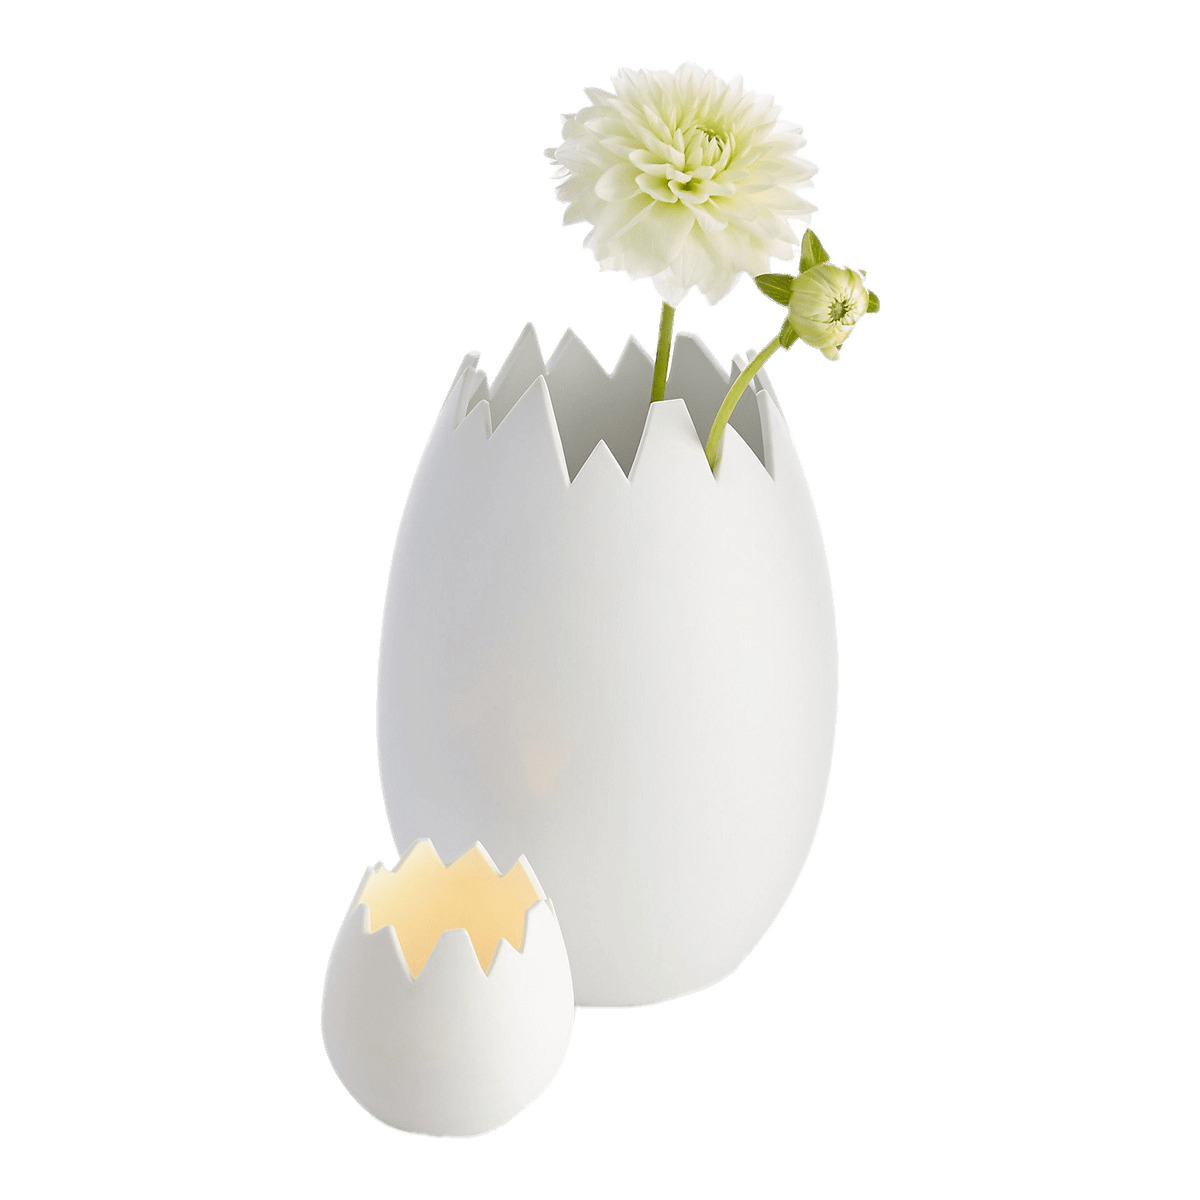 Cracked Eggshell Vase icons